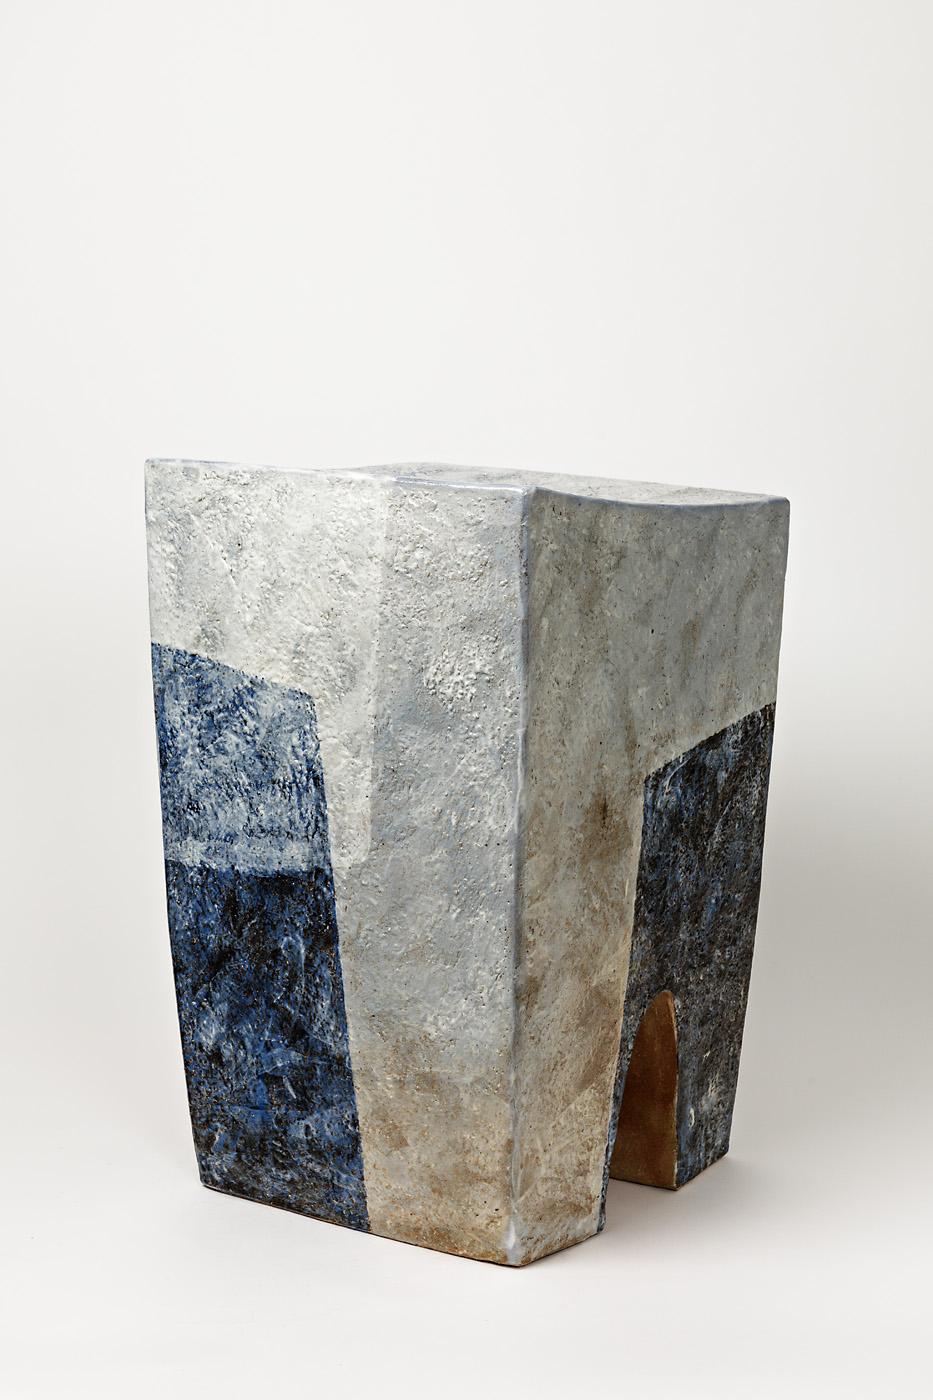 French Stoneware Stool by M. Georg with Glaze Decoration, 2017